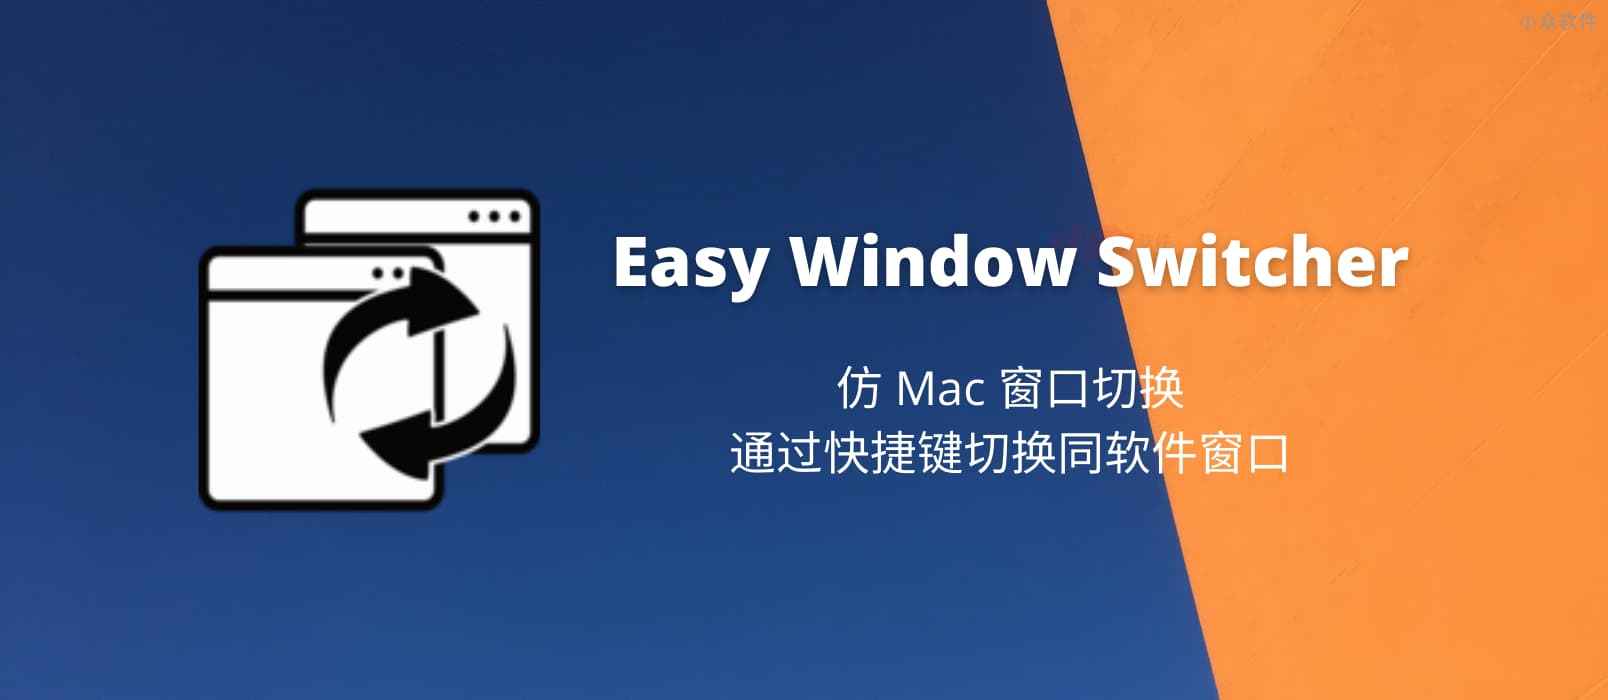 Easy Window Switcher – 仿 Mac 窗口切换，通过快捷键切换同软件窗口[Windows]